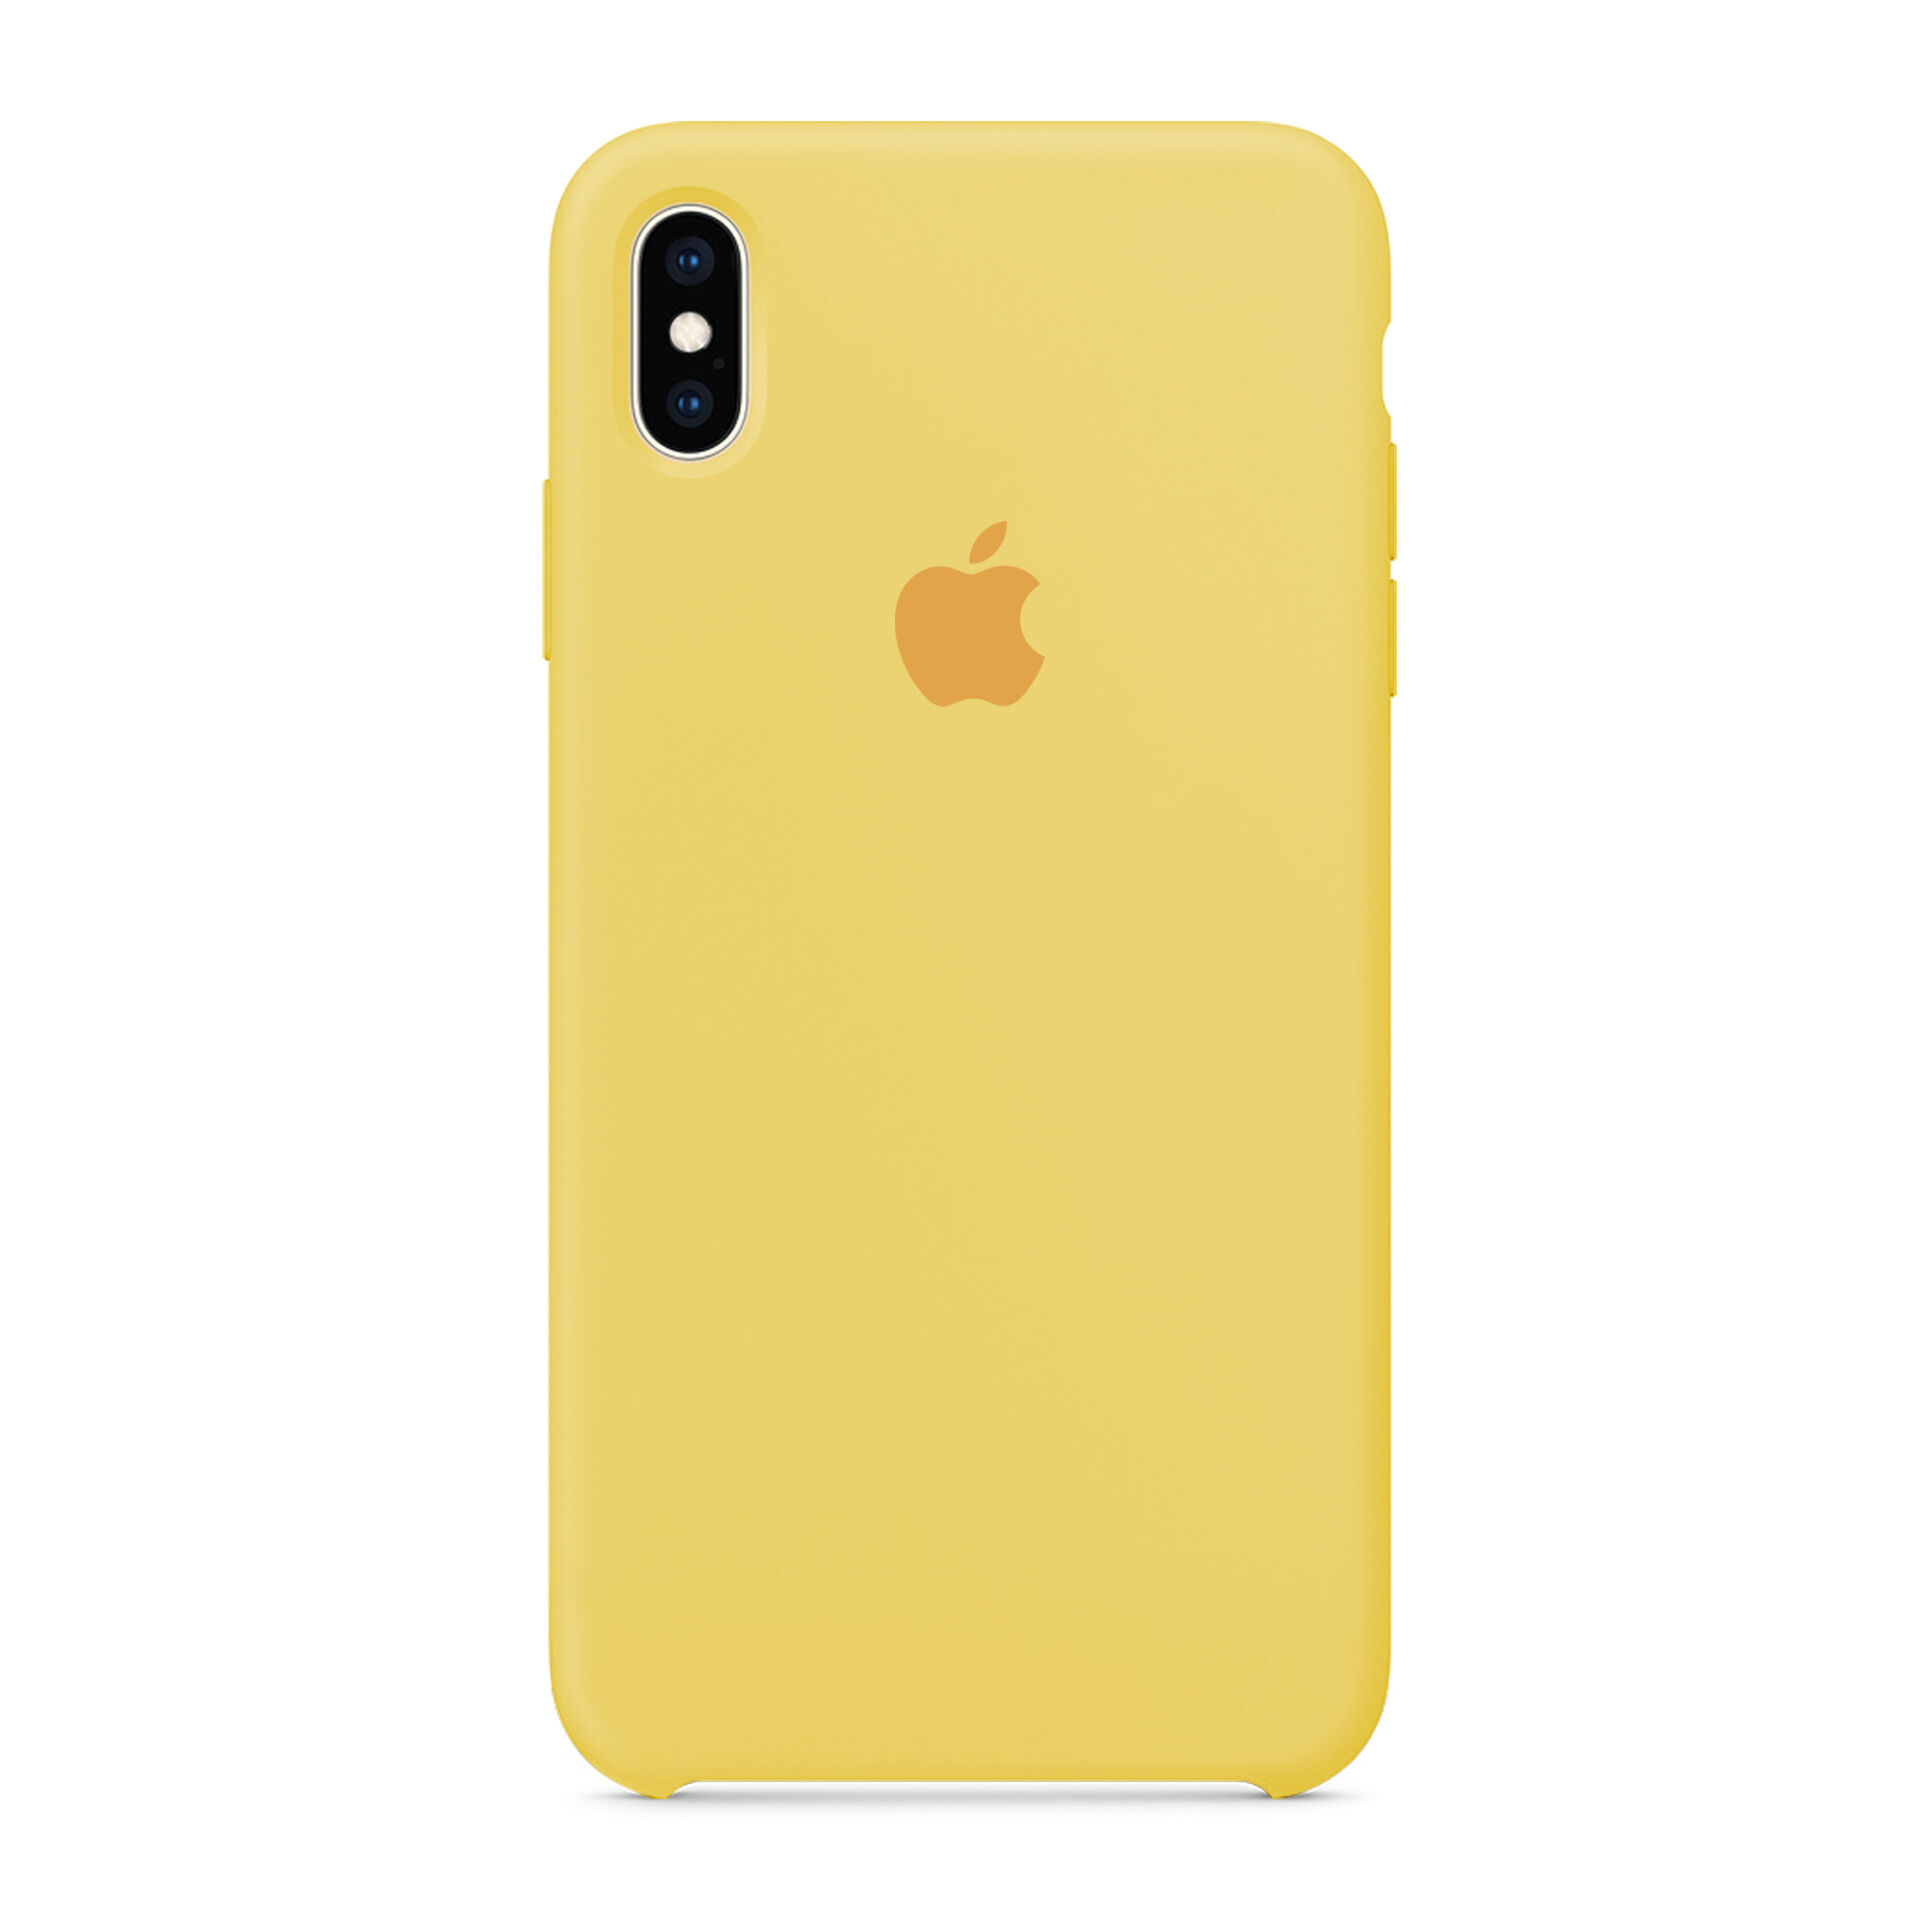 Apple Capa silicone Amarelo claro iPhone XS Max